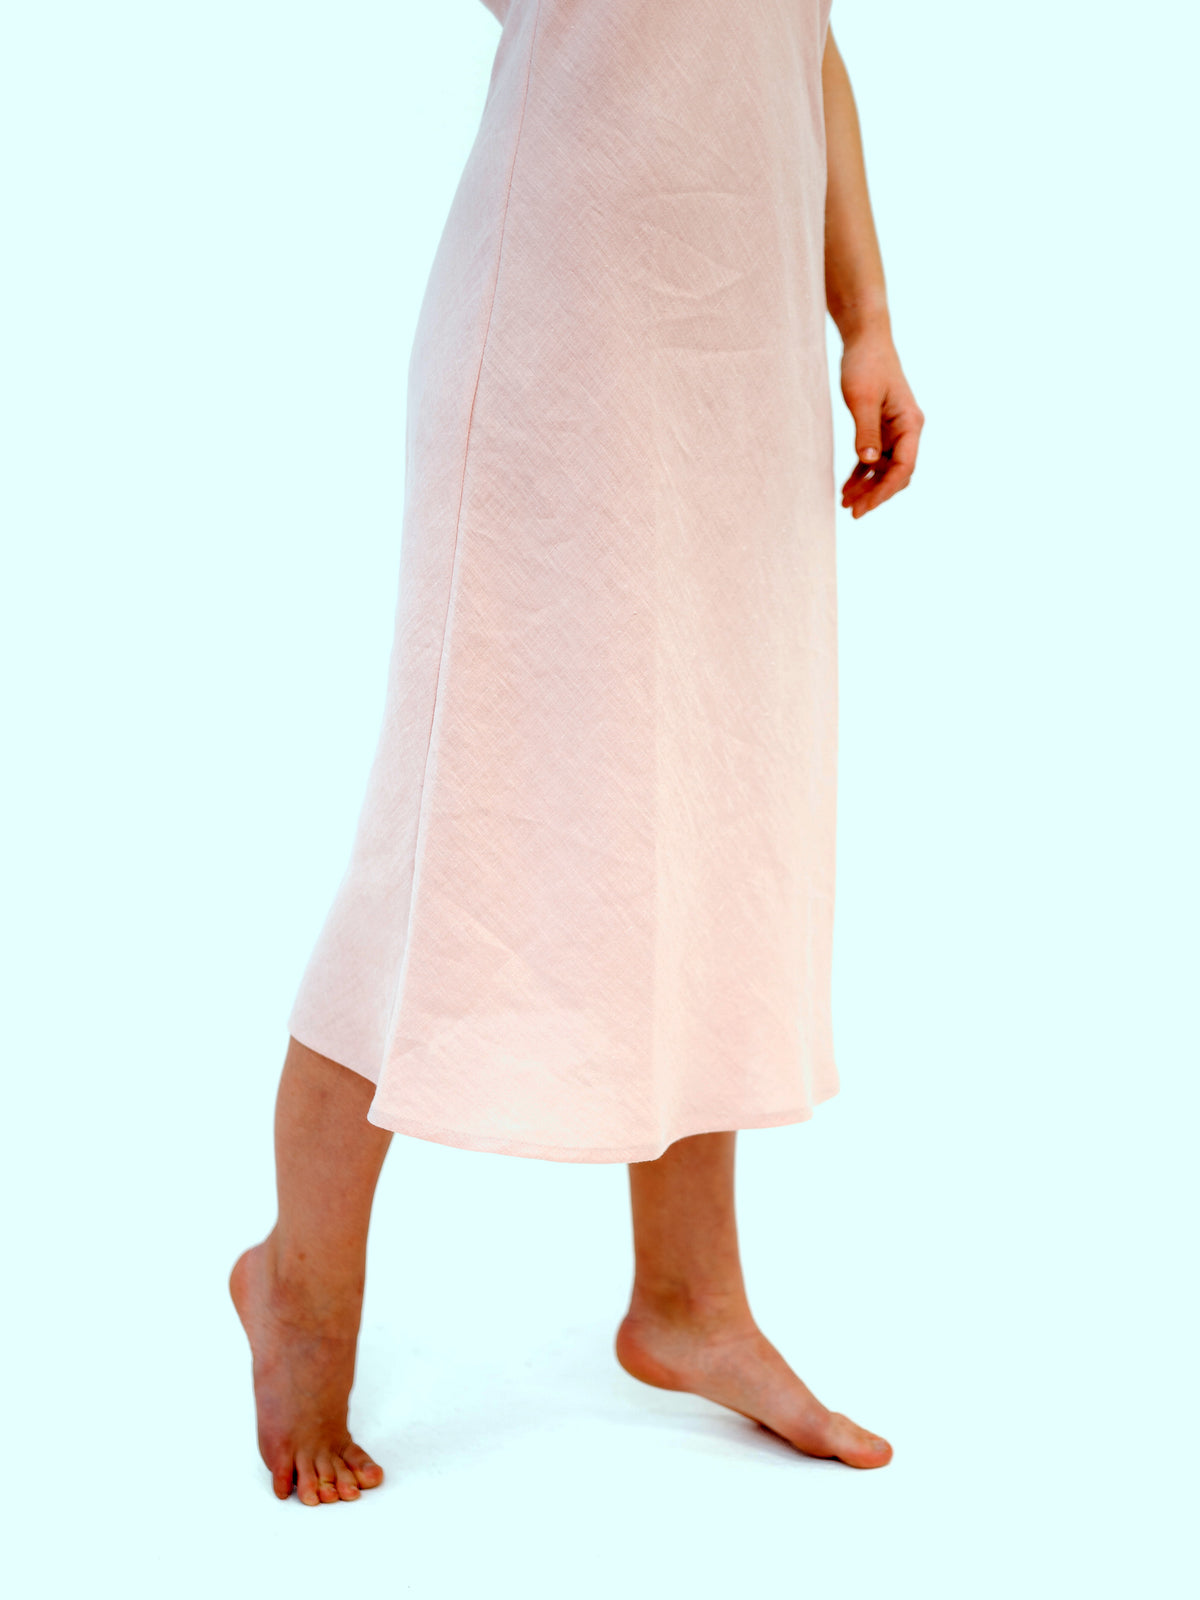 Plus size linen tunic dress 'Gemma', custom sized linen dresses - Linenbee